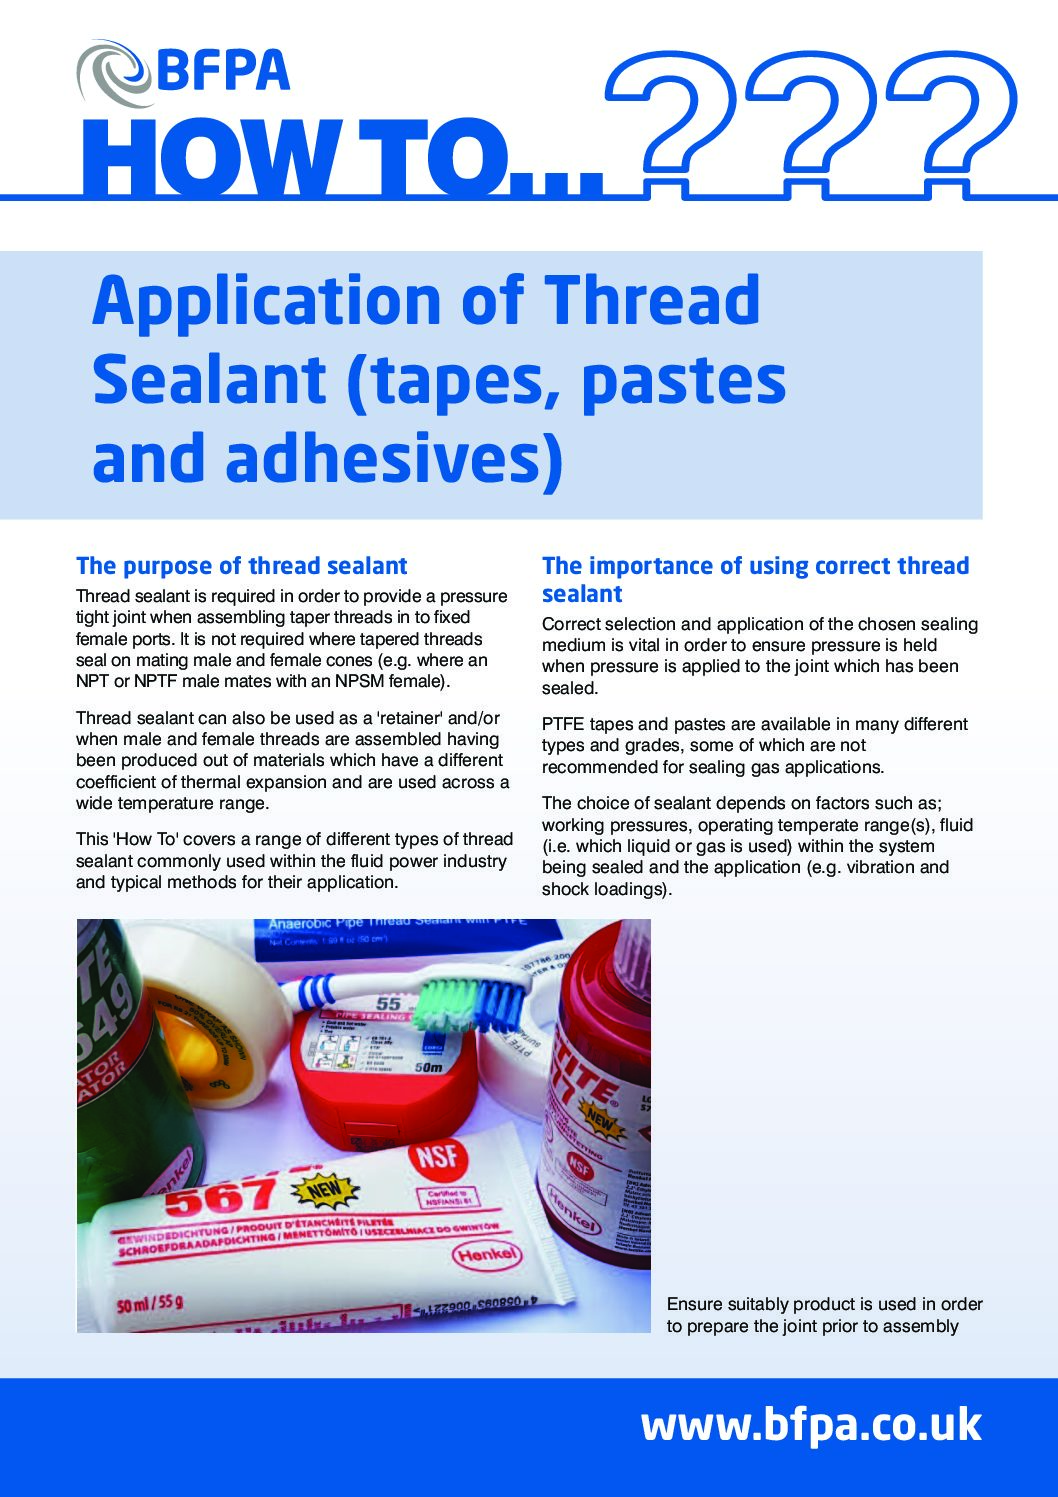 How to apply thread sealant